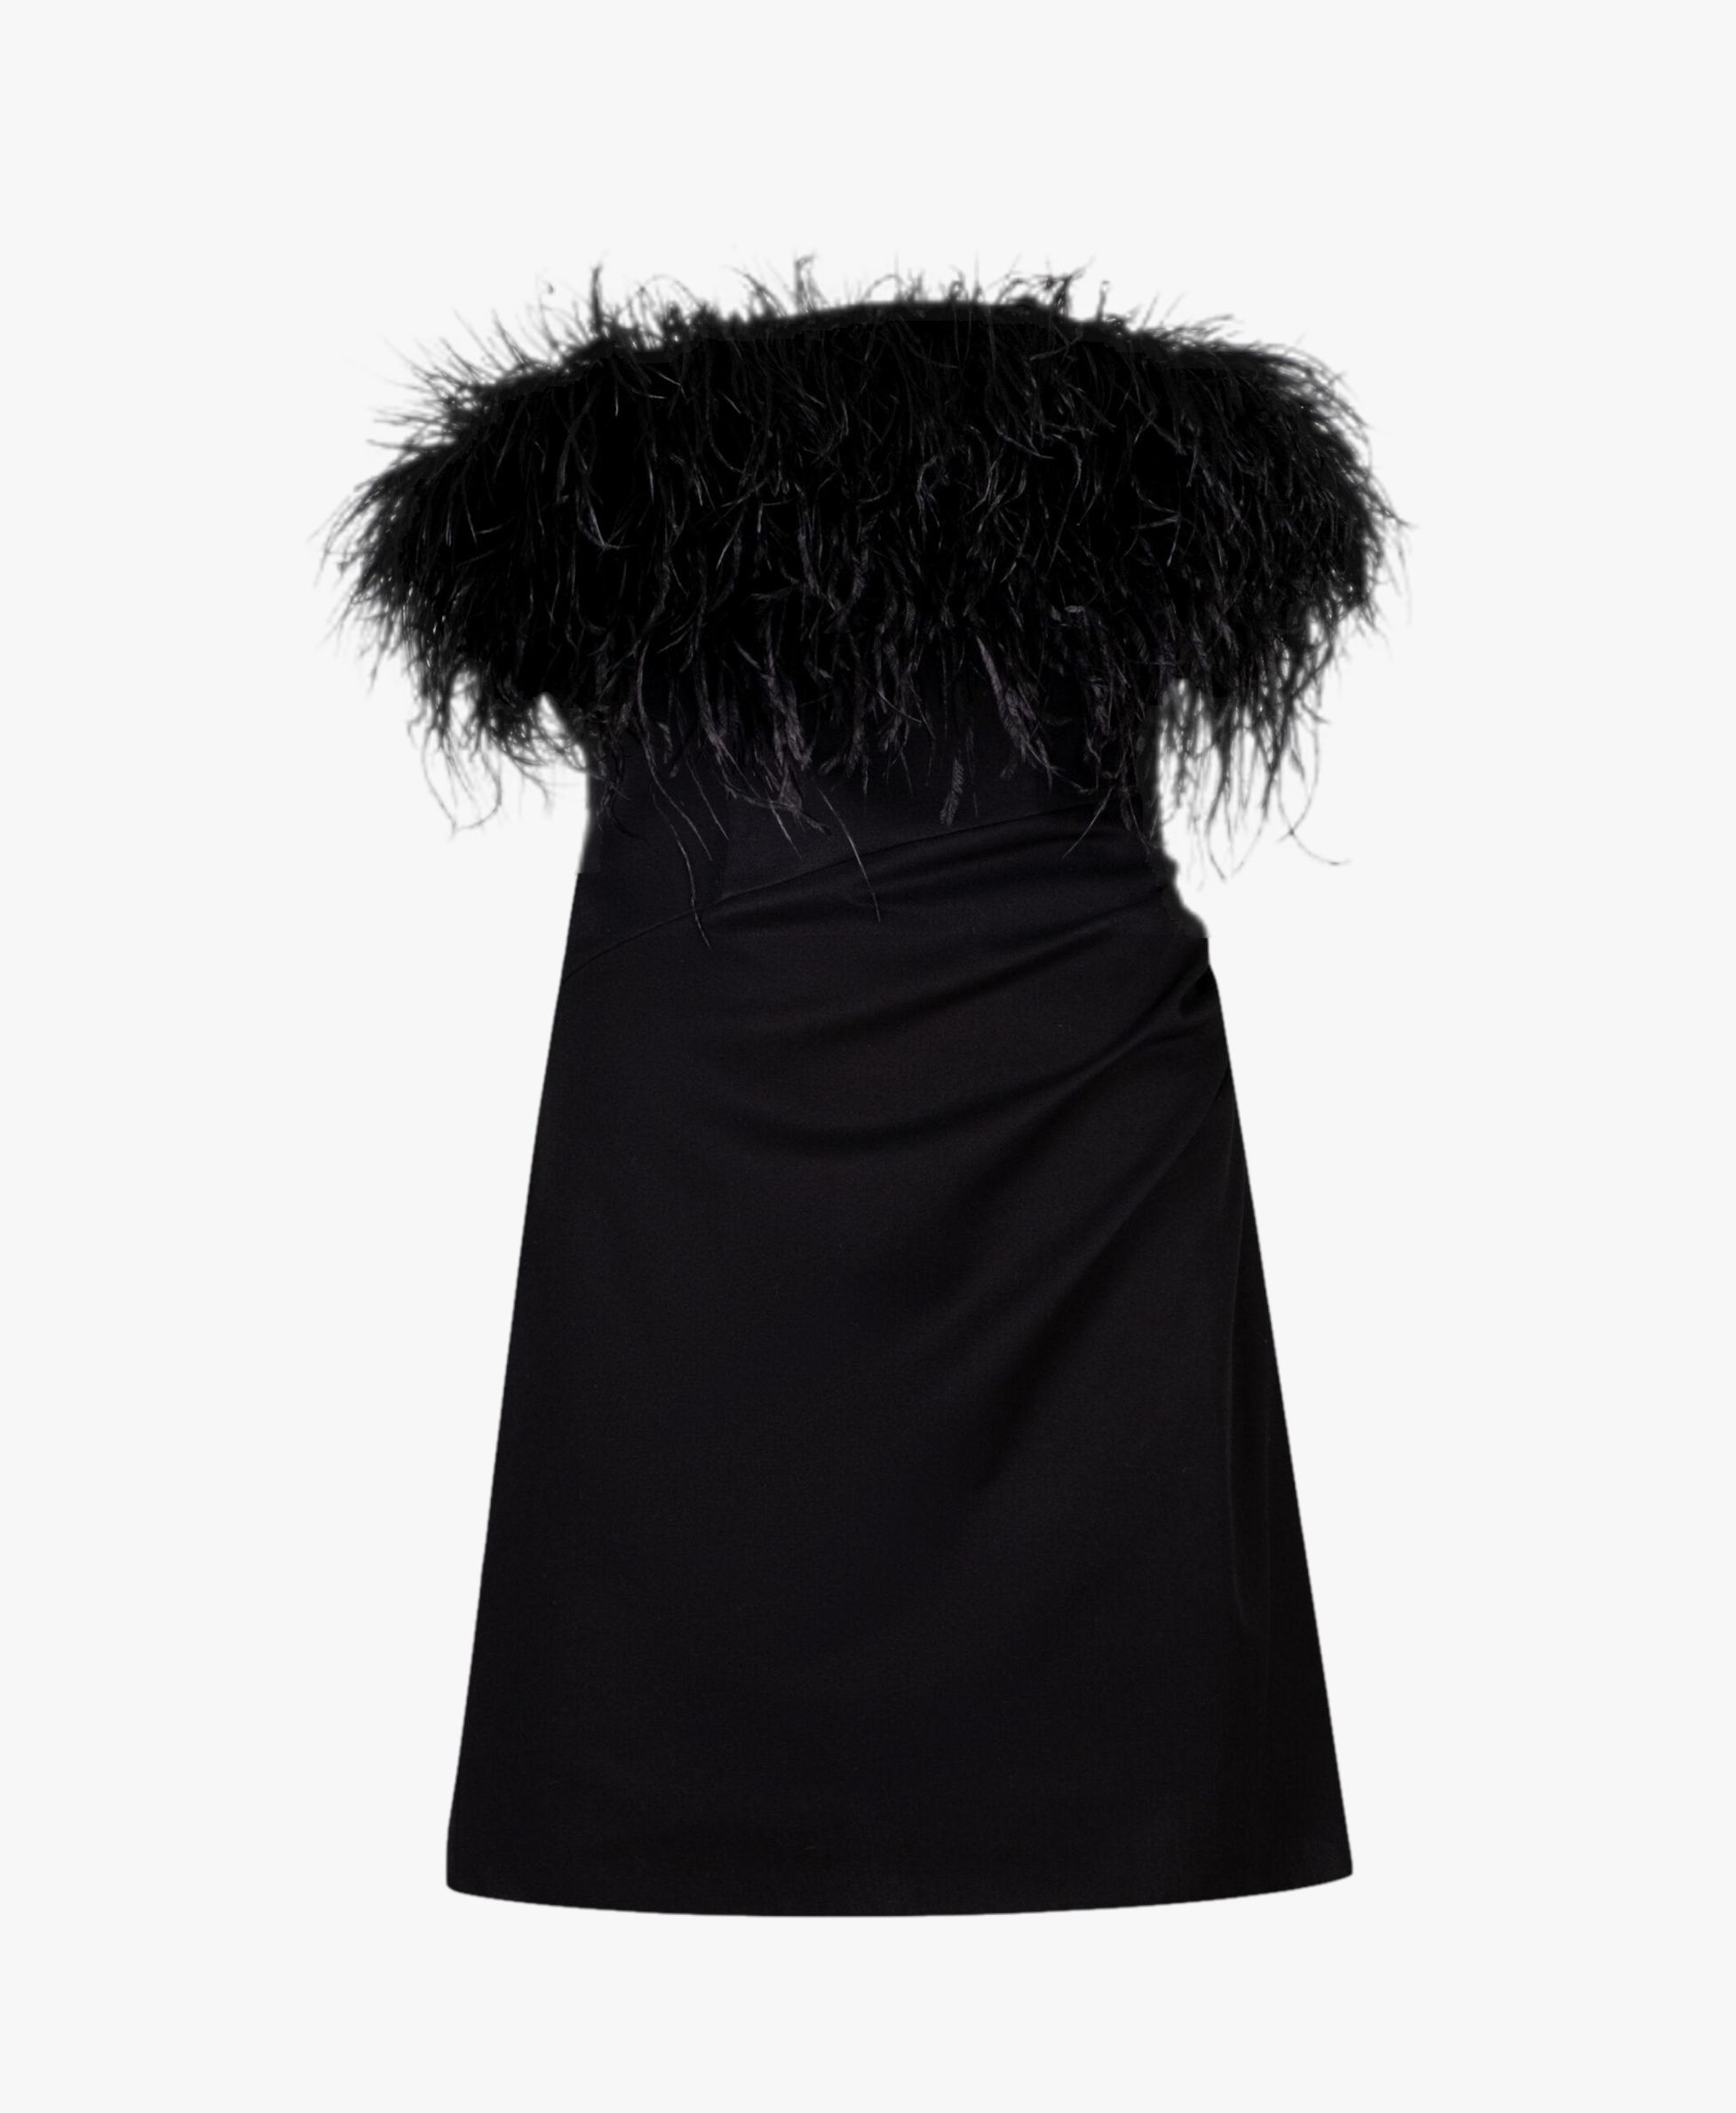 Buy Black Feather Dress by F.ILKK - Mini dresses egncduynx5f6